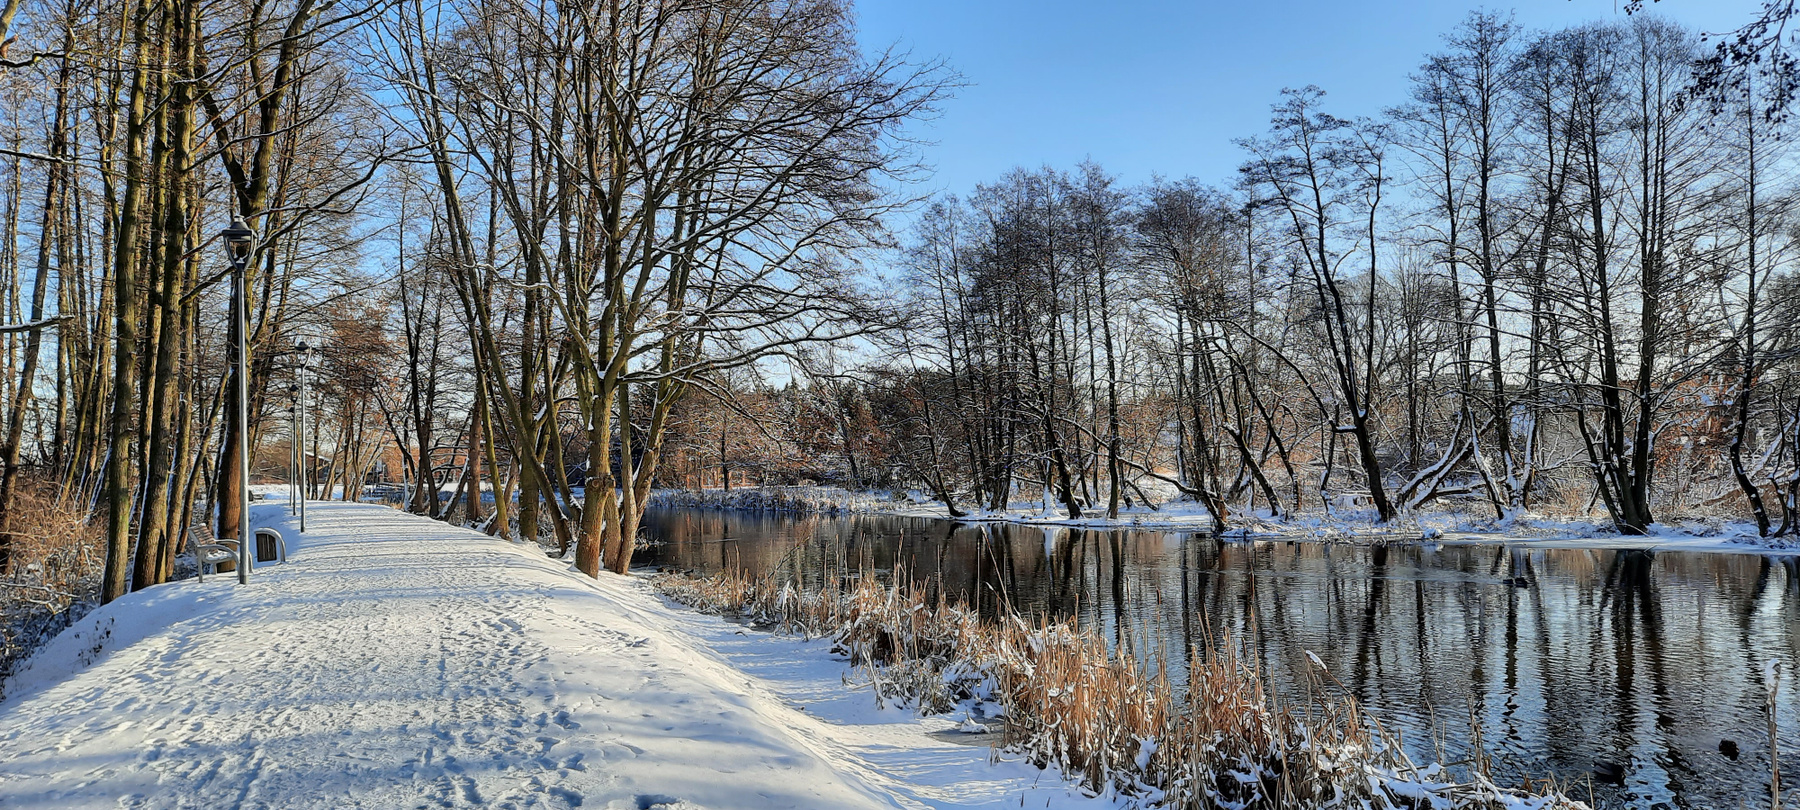 Река зимой Река зима снег Польша